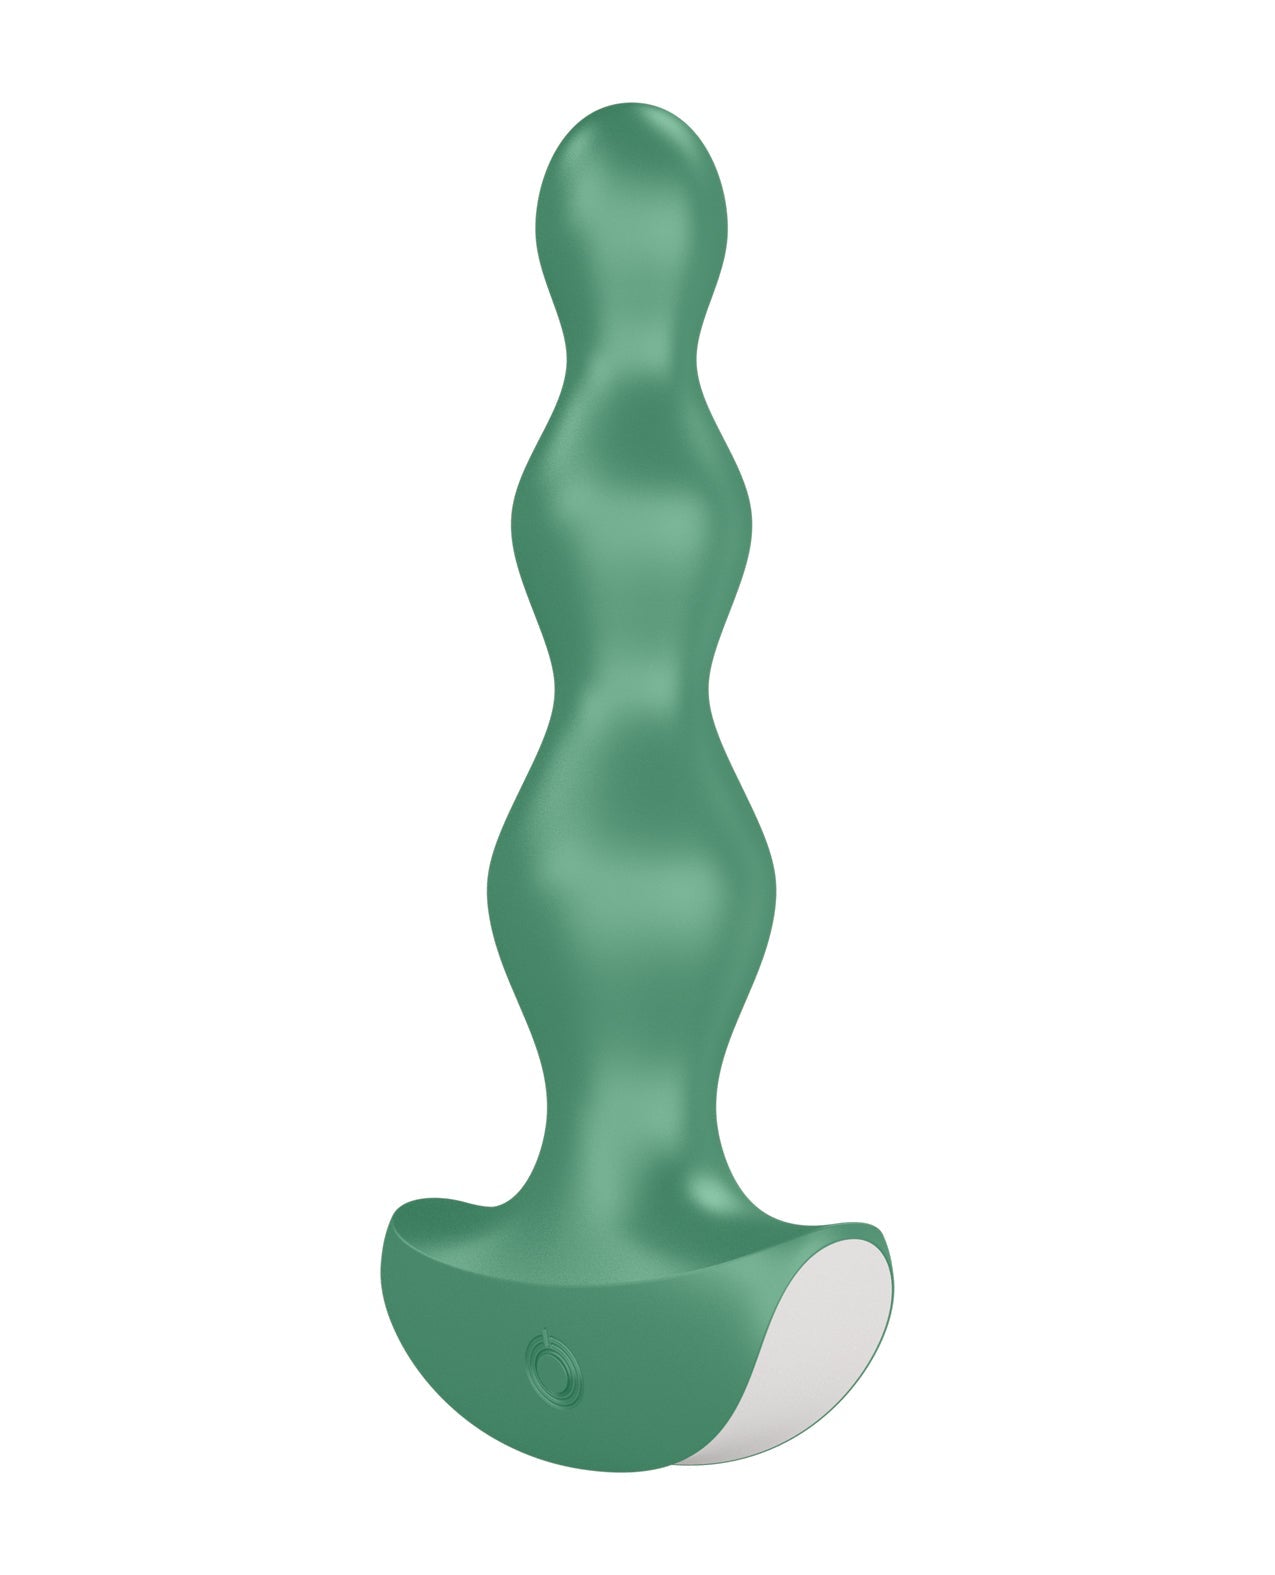 Satisfyer Lolli Plug 2 - Green